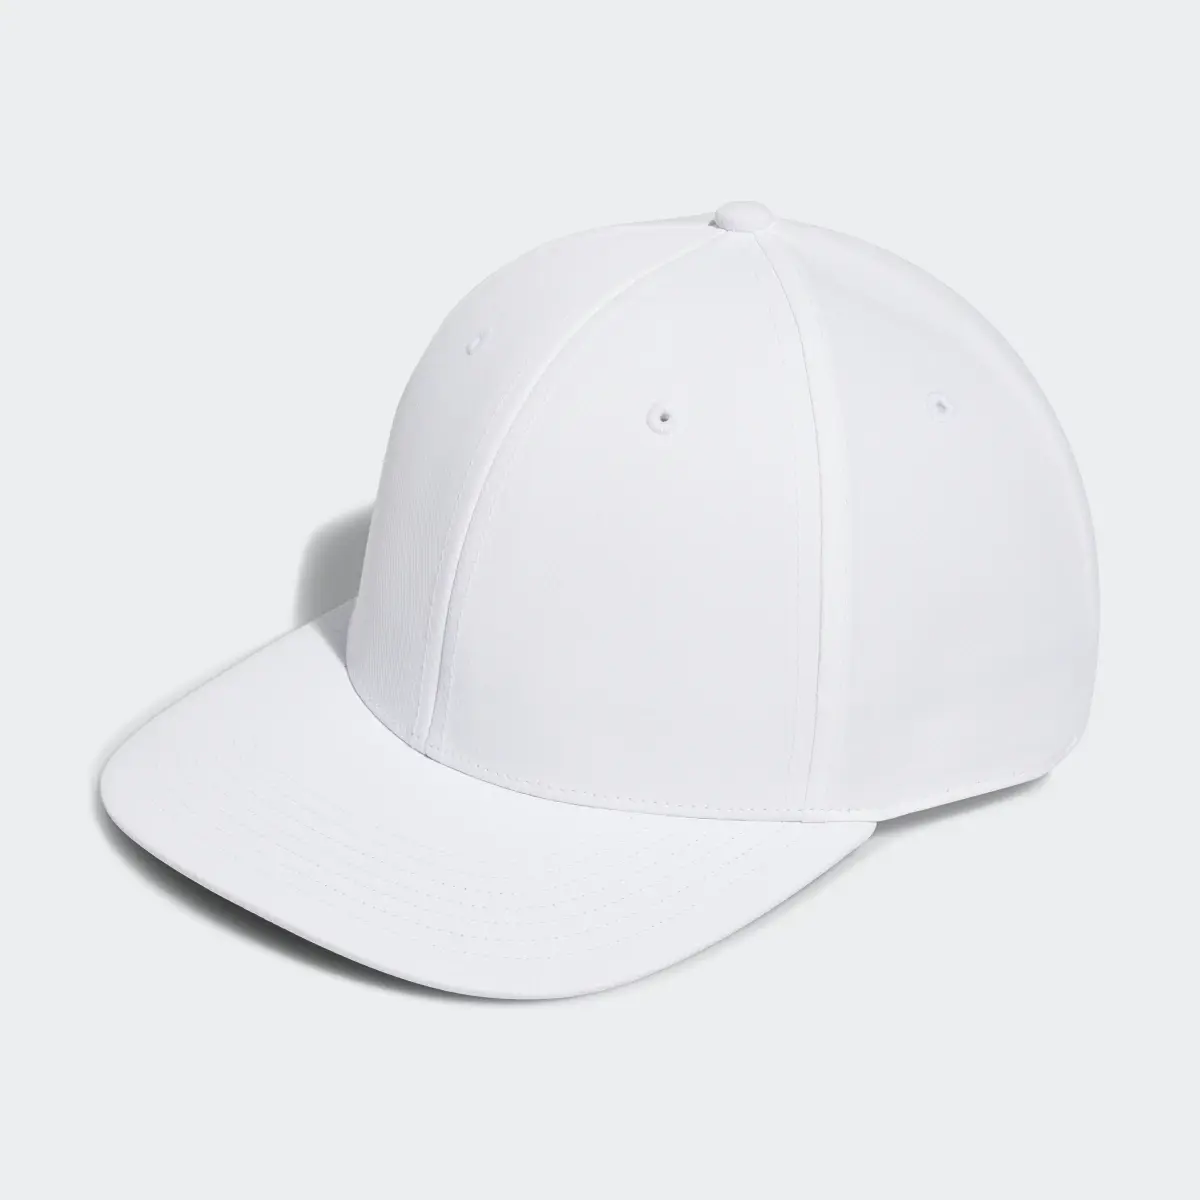 Adidas Crestable Tour Snapback Golf Hat. 2